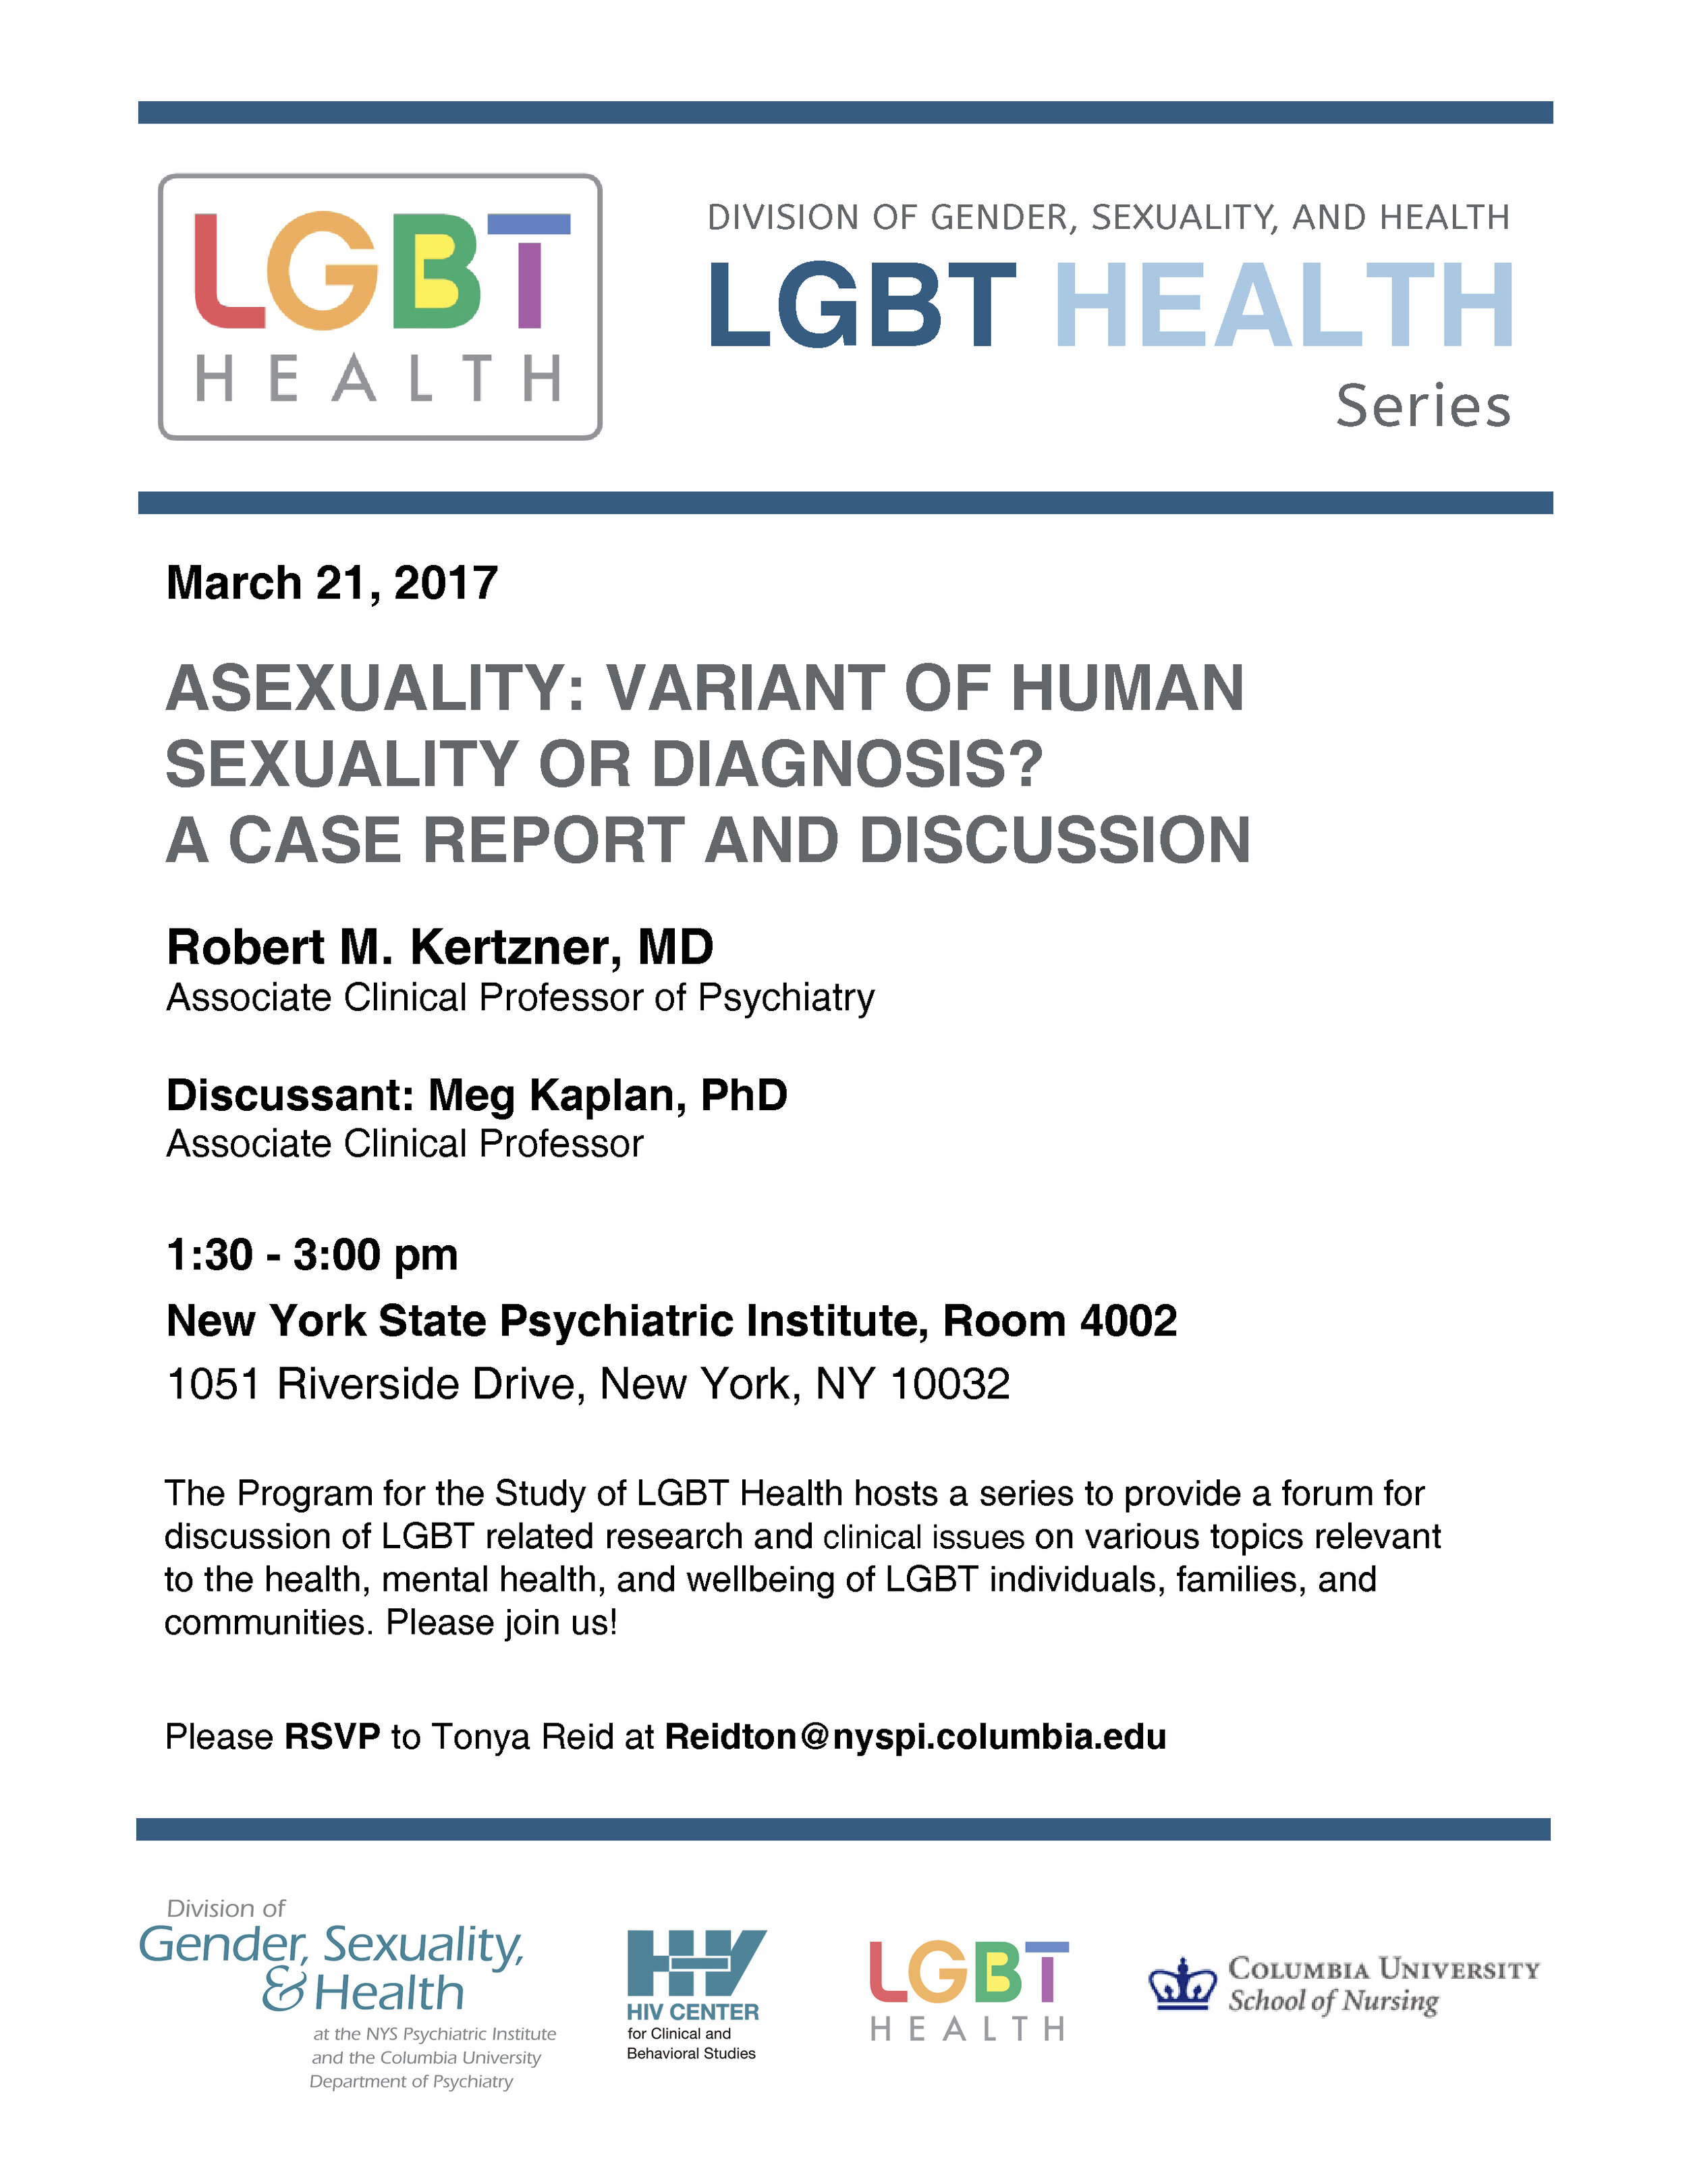 LGBT Health Series March 21 2017.jpg